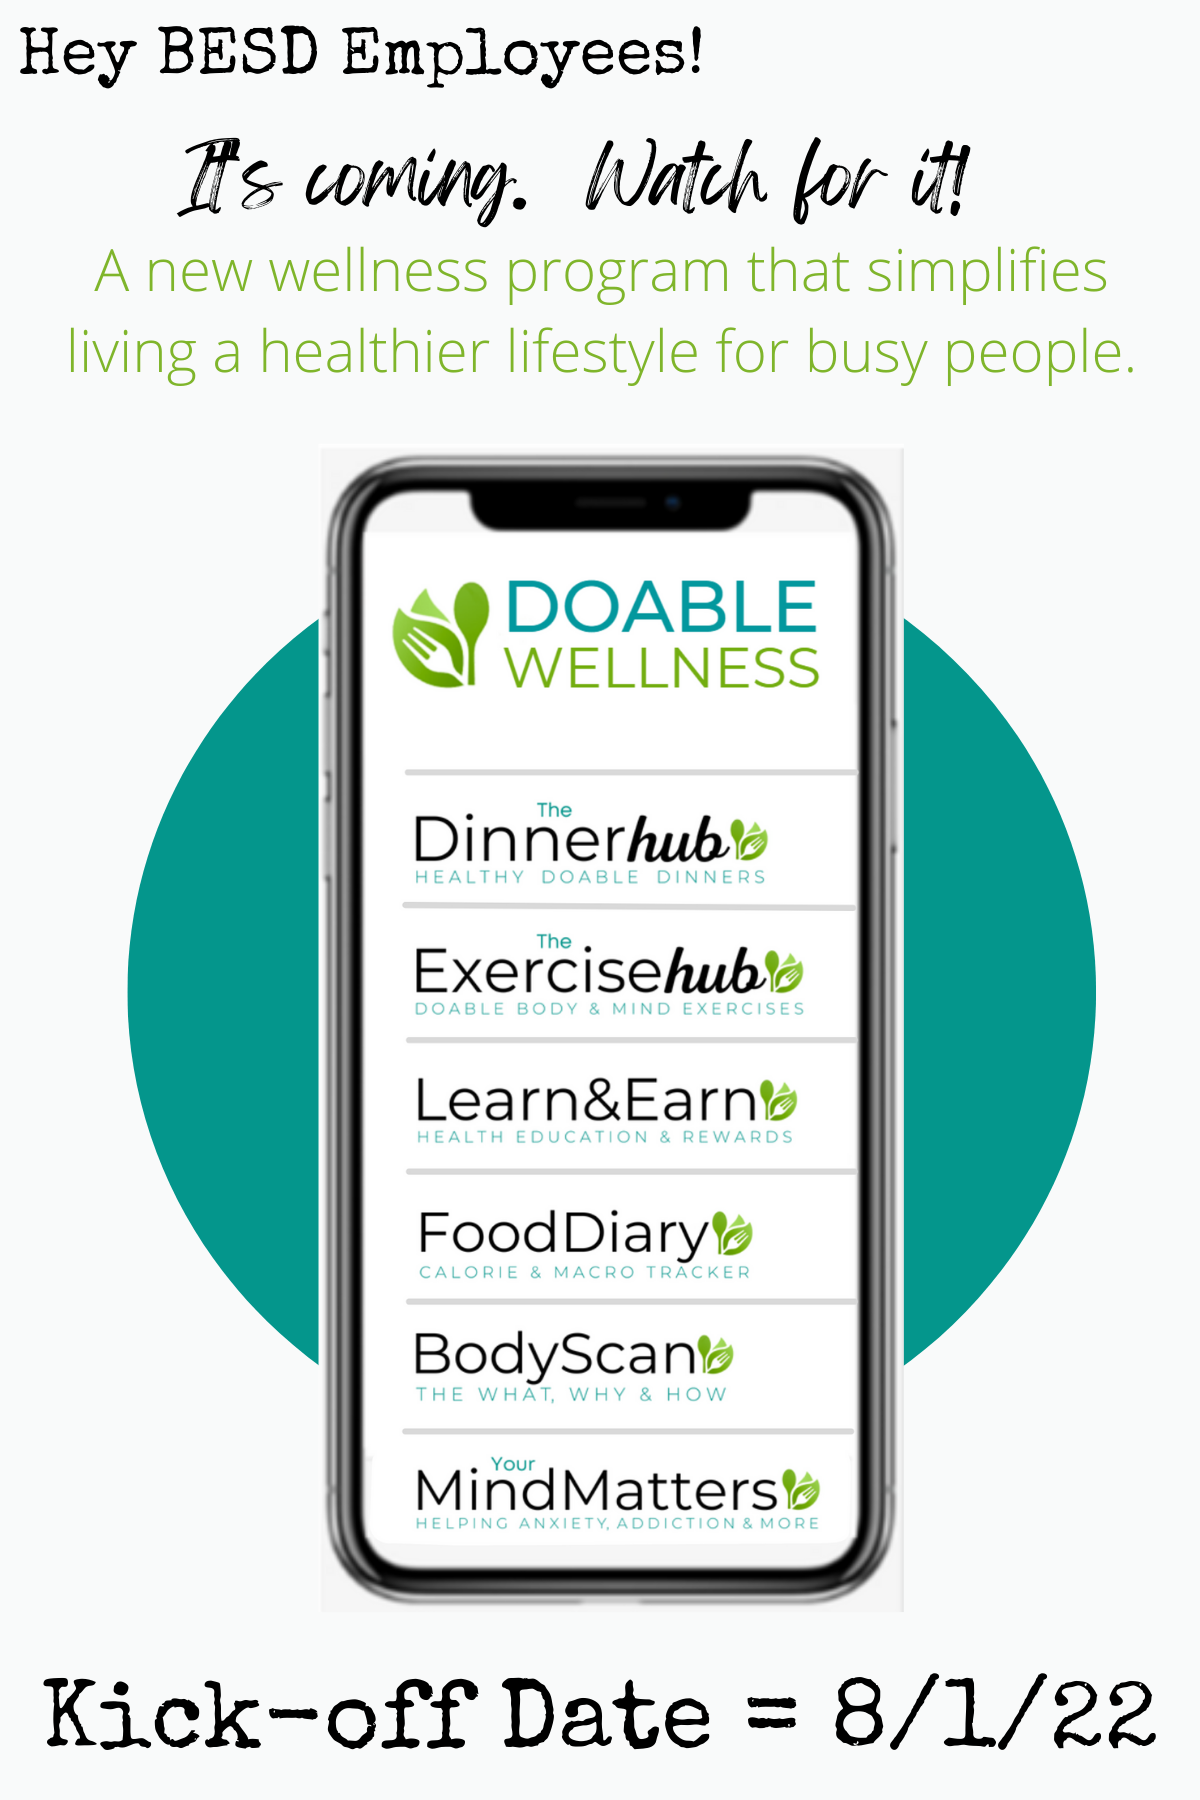 Doable Wellness, Dinner Hub, Exercise Hub, Learn * Earn Hub, Food Diary, Body Scan, Mind Matters